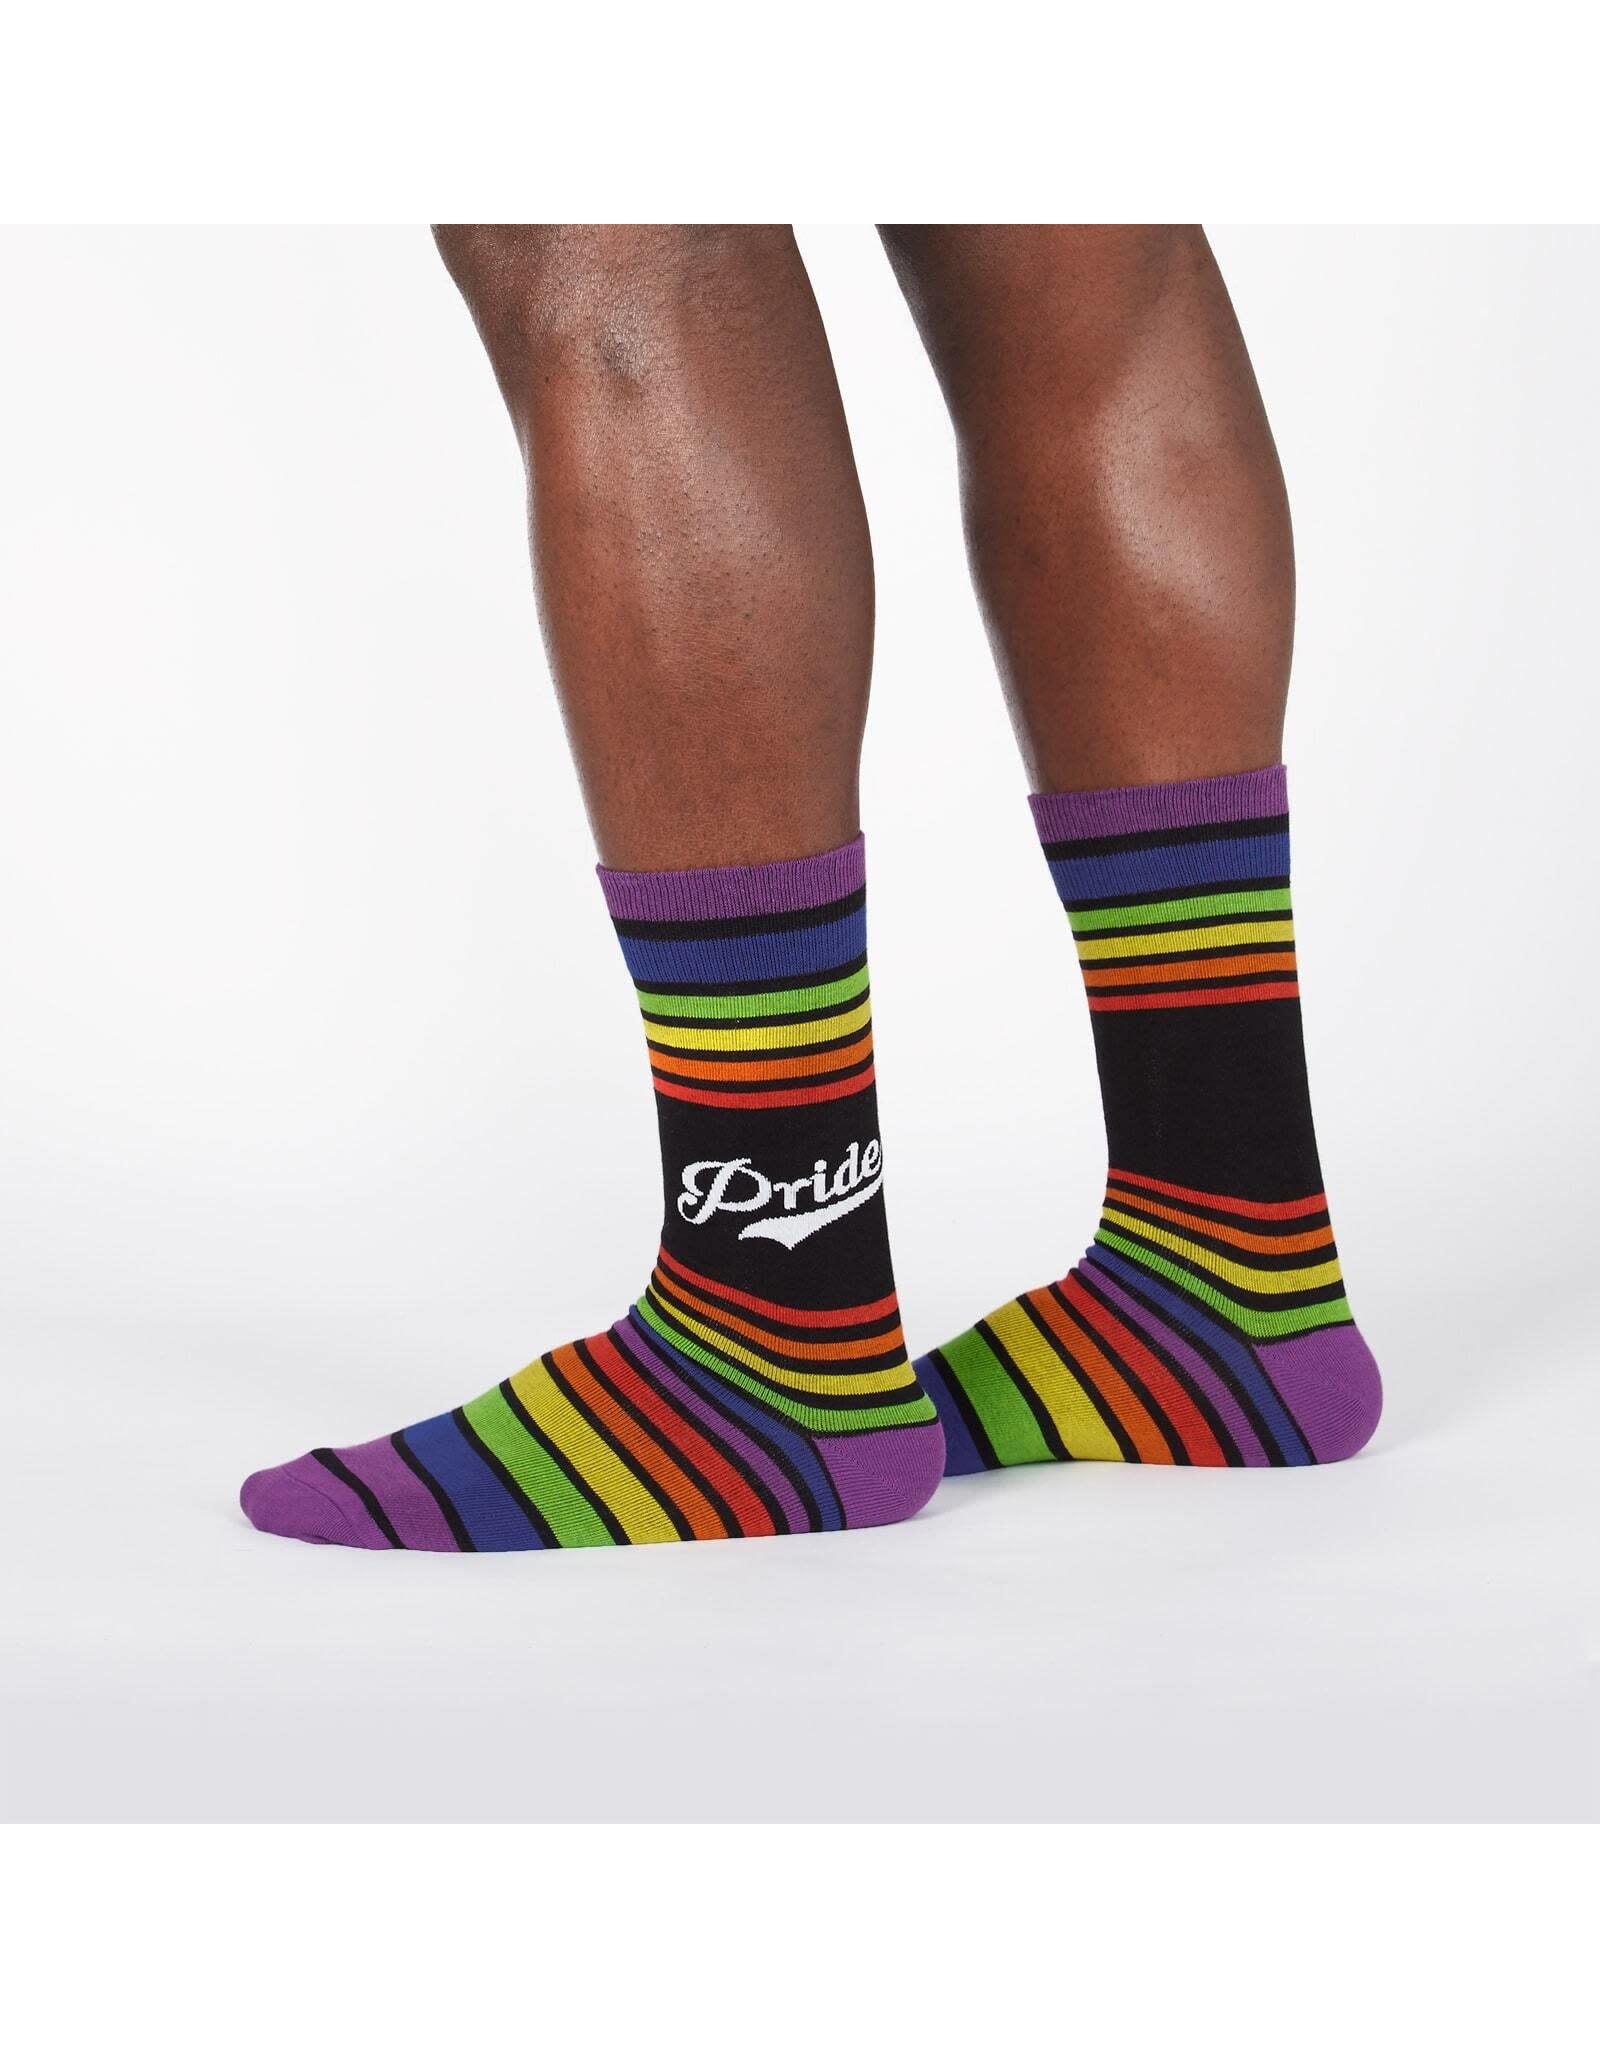 SOCK IT TO ME Men's Team Pride Crew Socks